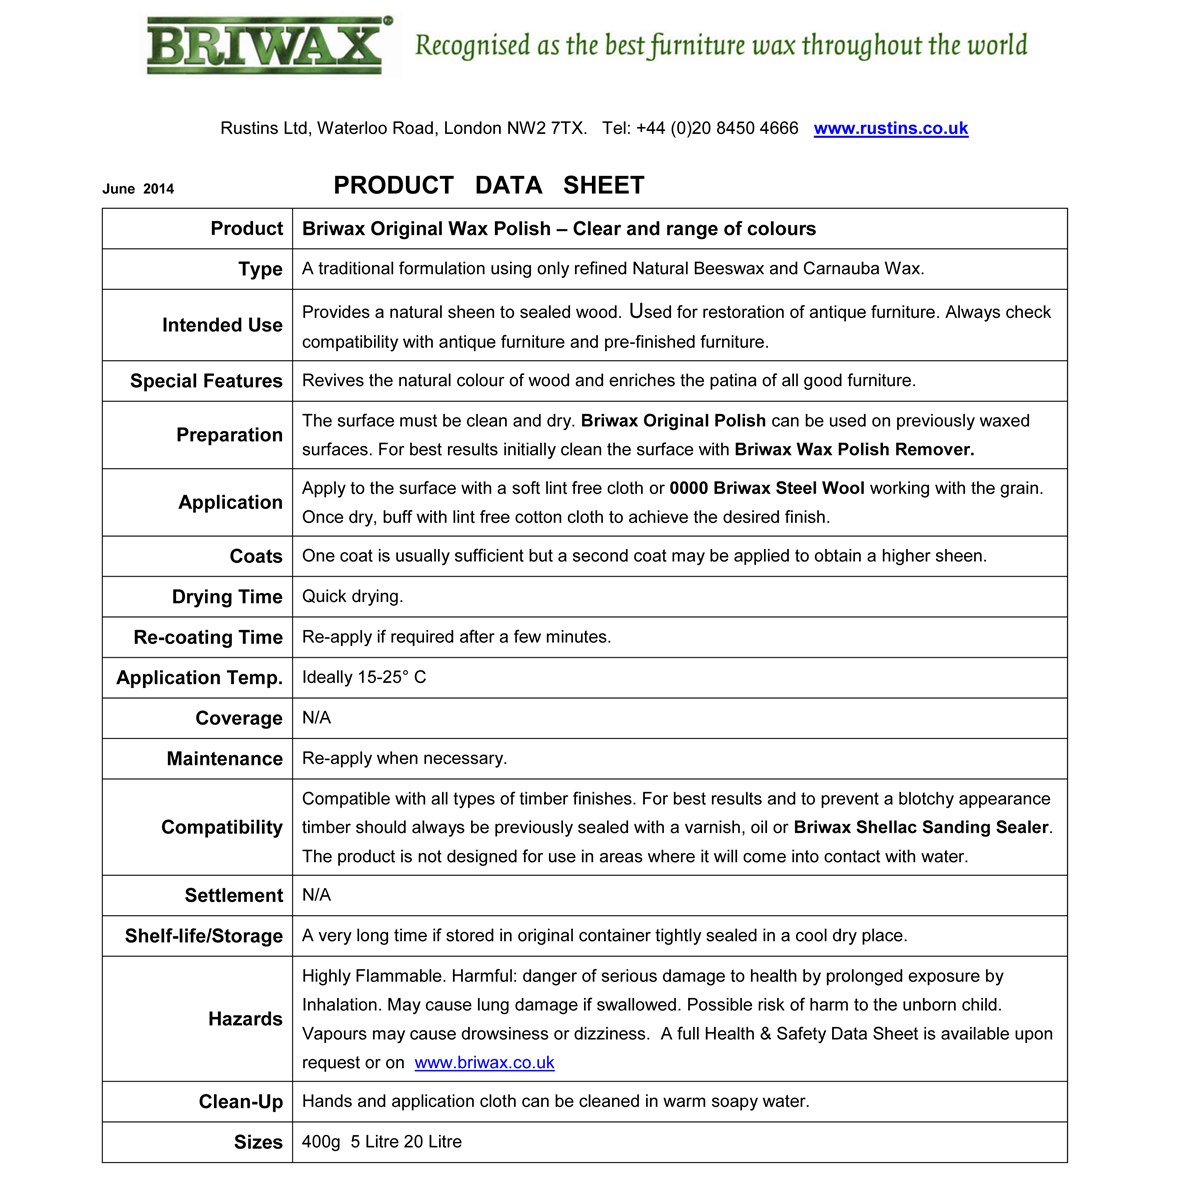 How to use Briwax Original Wax Polish 